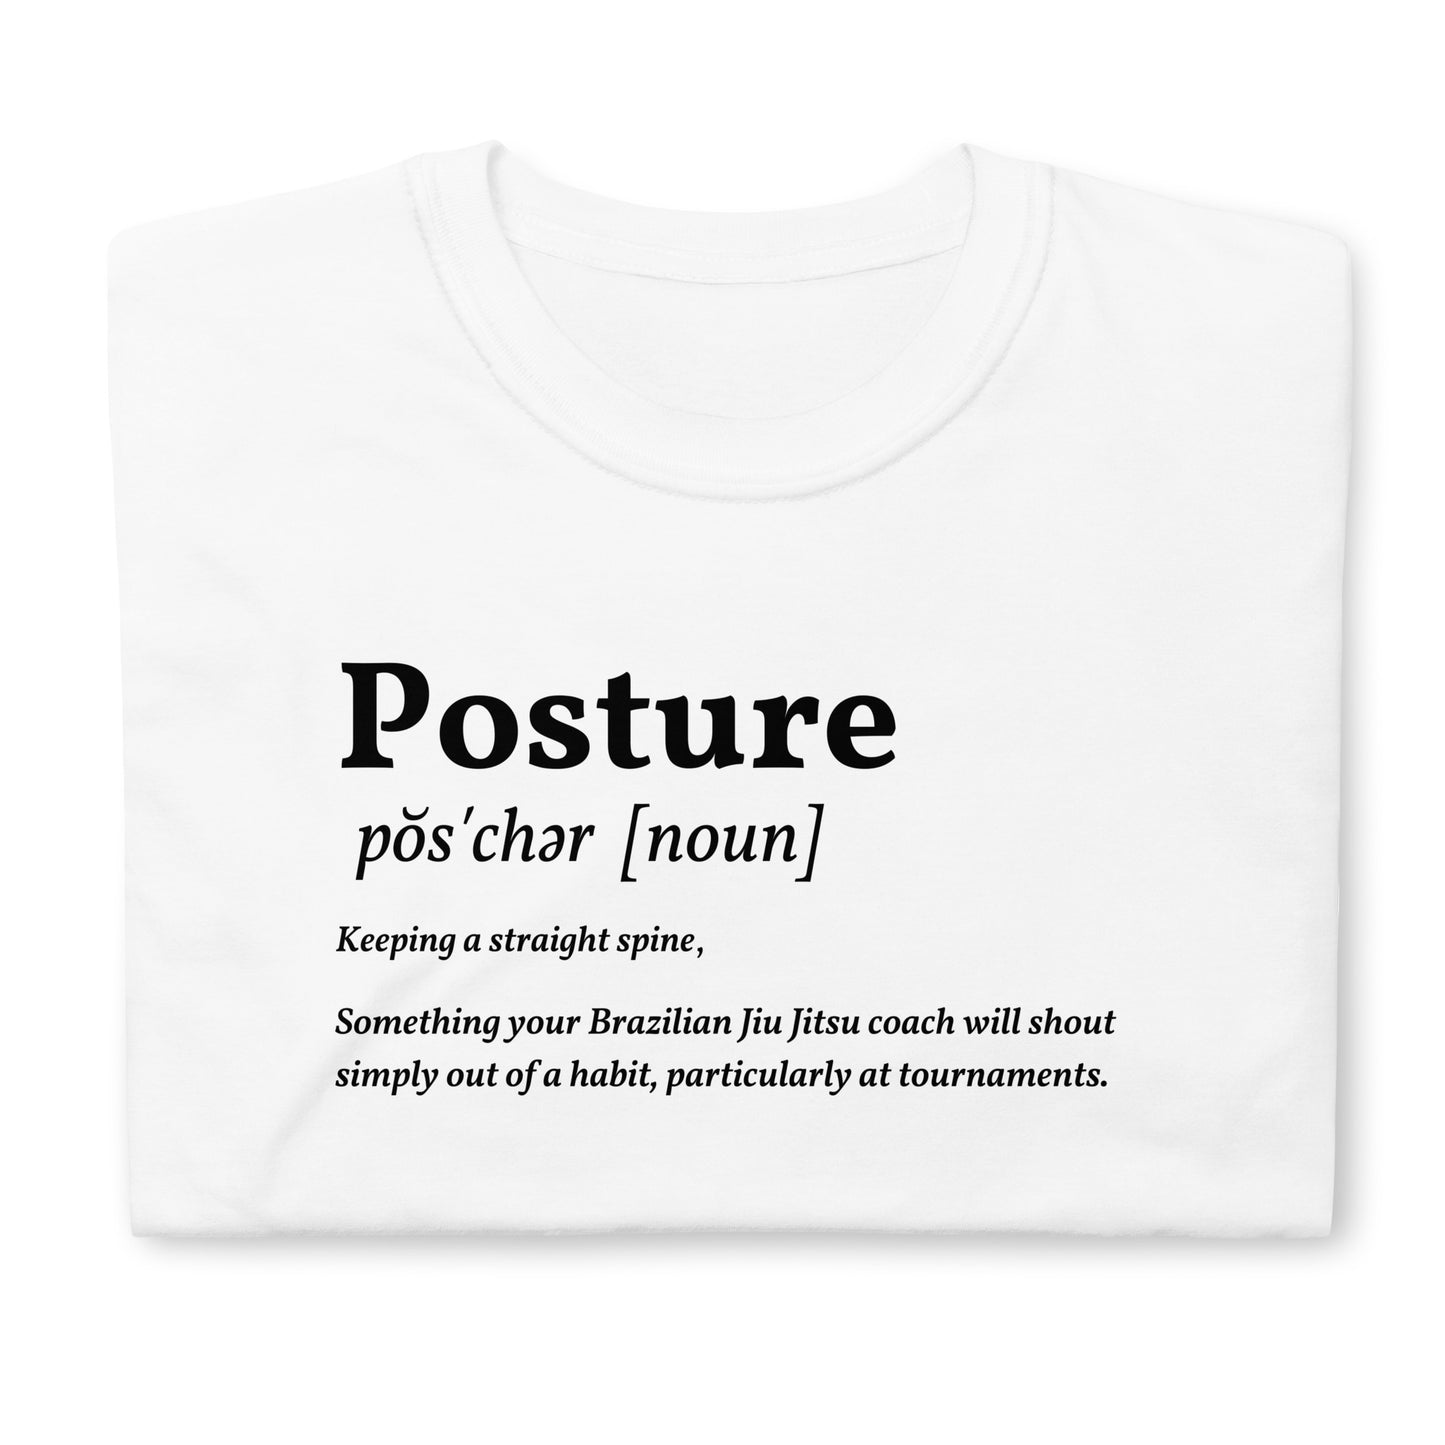 Posture, BJJ Meanings Short-Sleeve Unisex T-Shirt